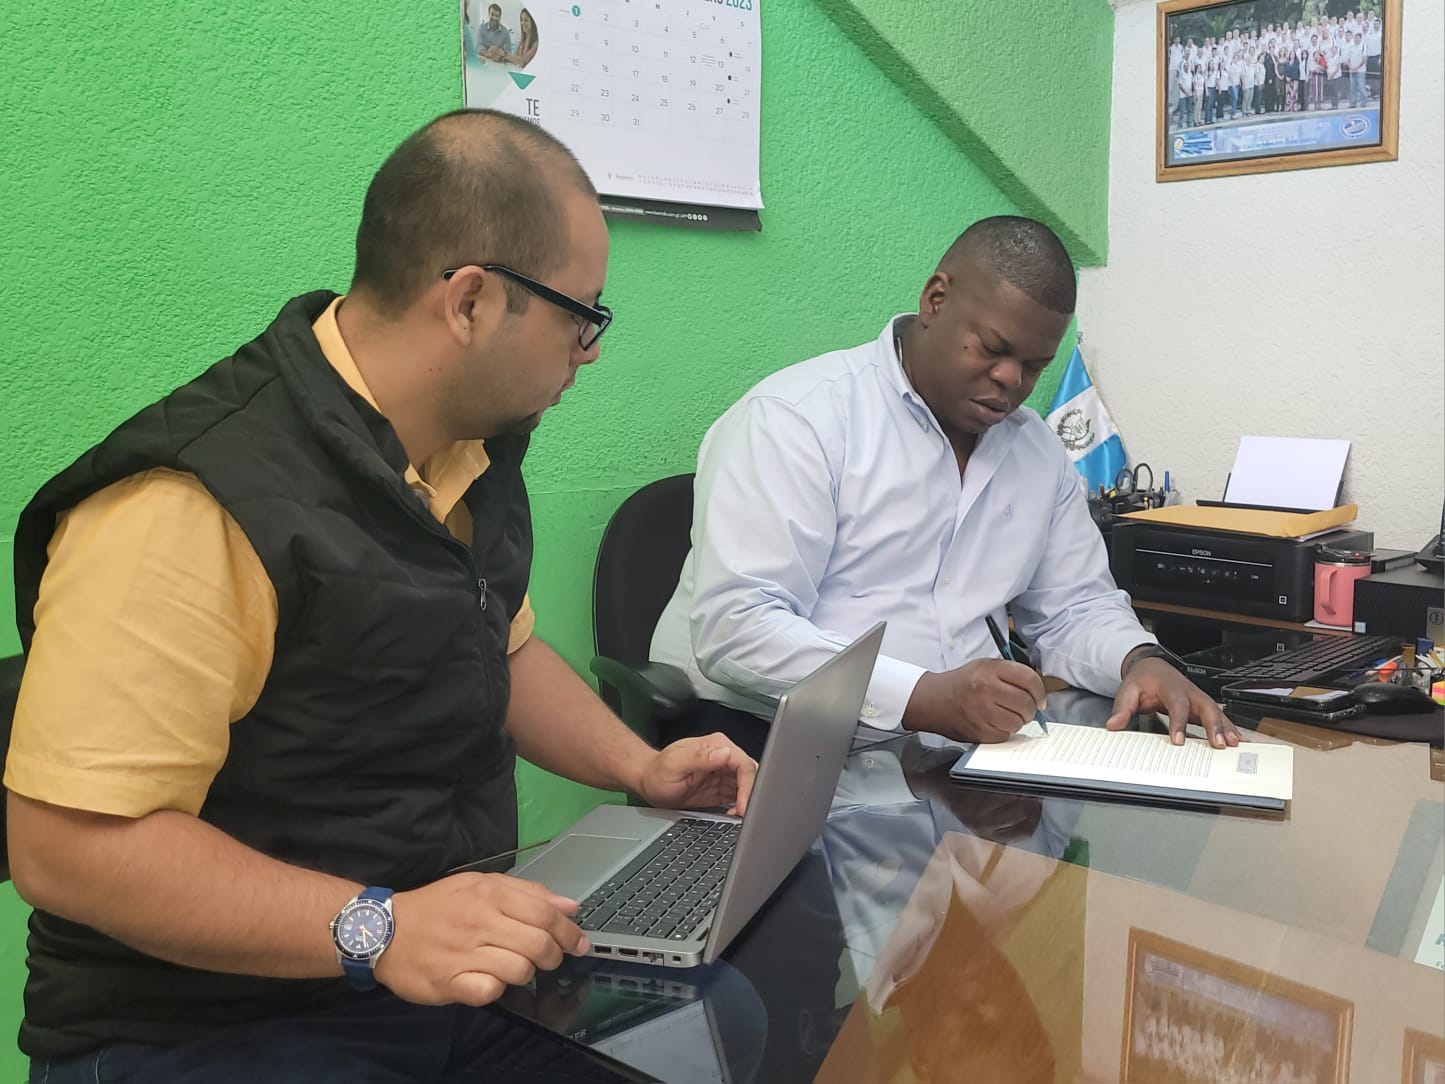 Félix Sabio prepares proposals for AFECAVOL